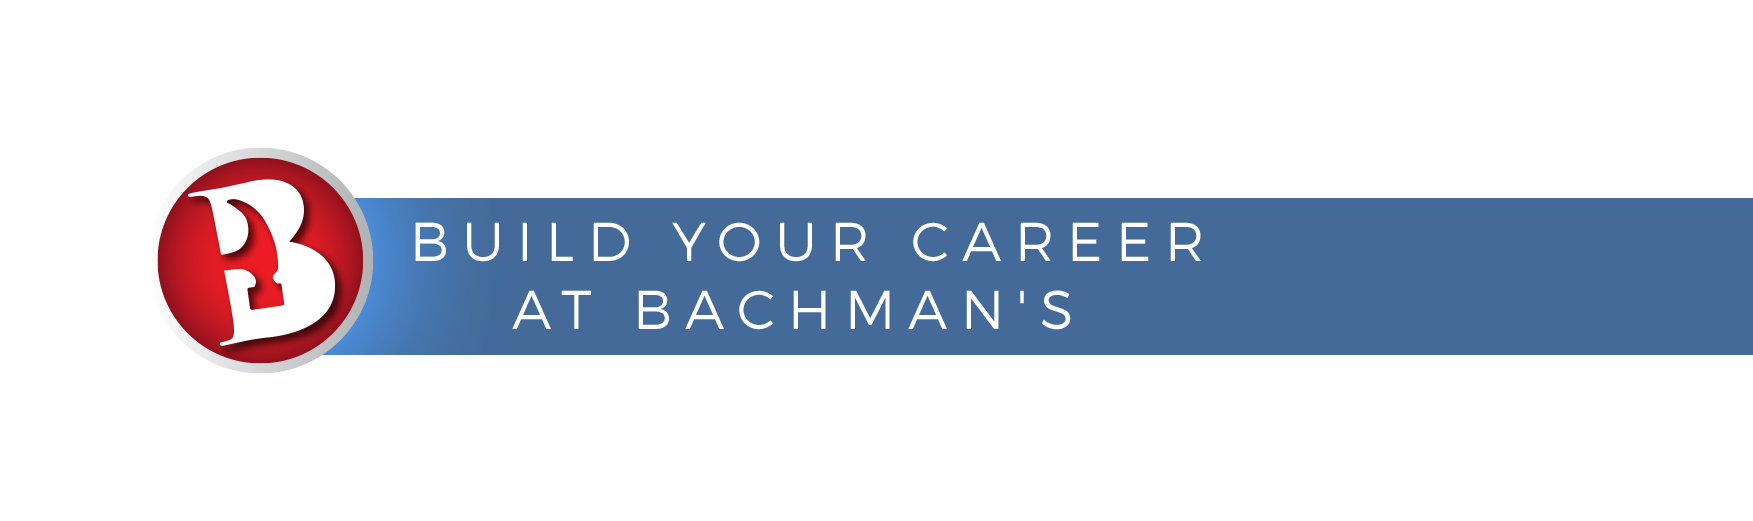 Bachman's Career Header Image